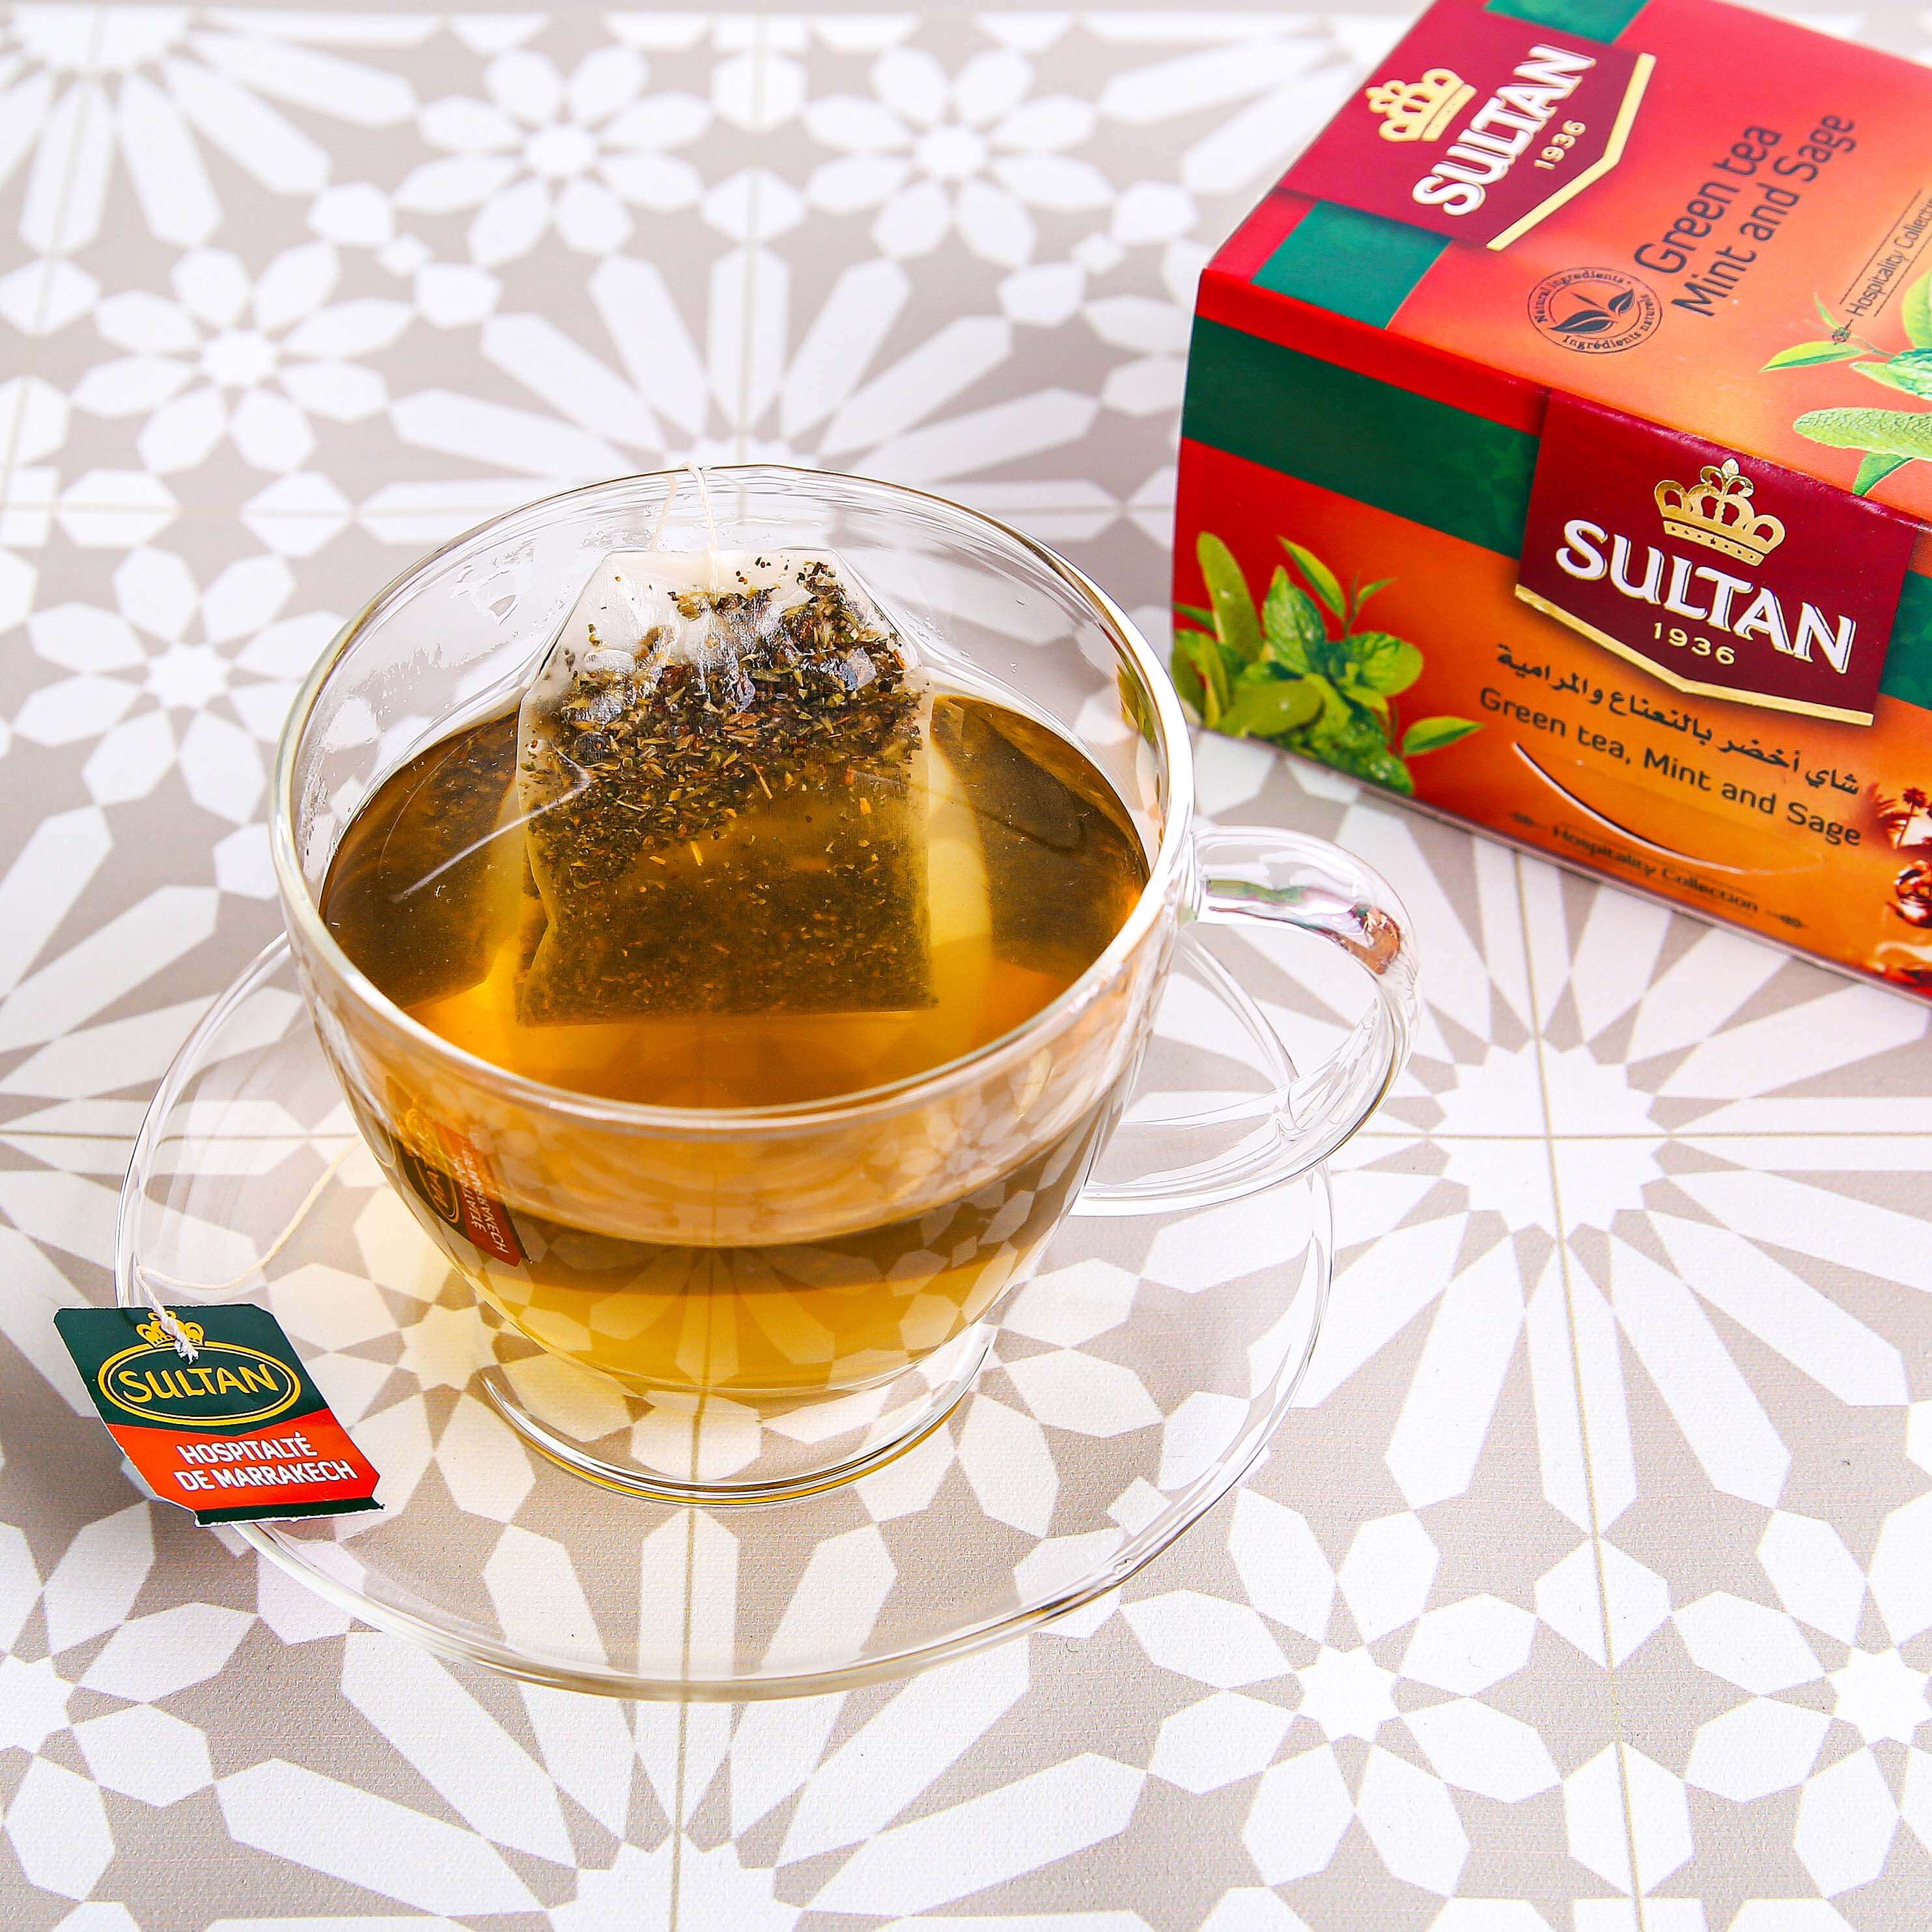 Mint and Sage Green Tea - 20 Tea bags